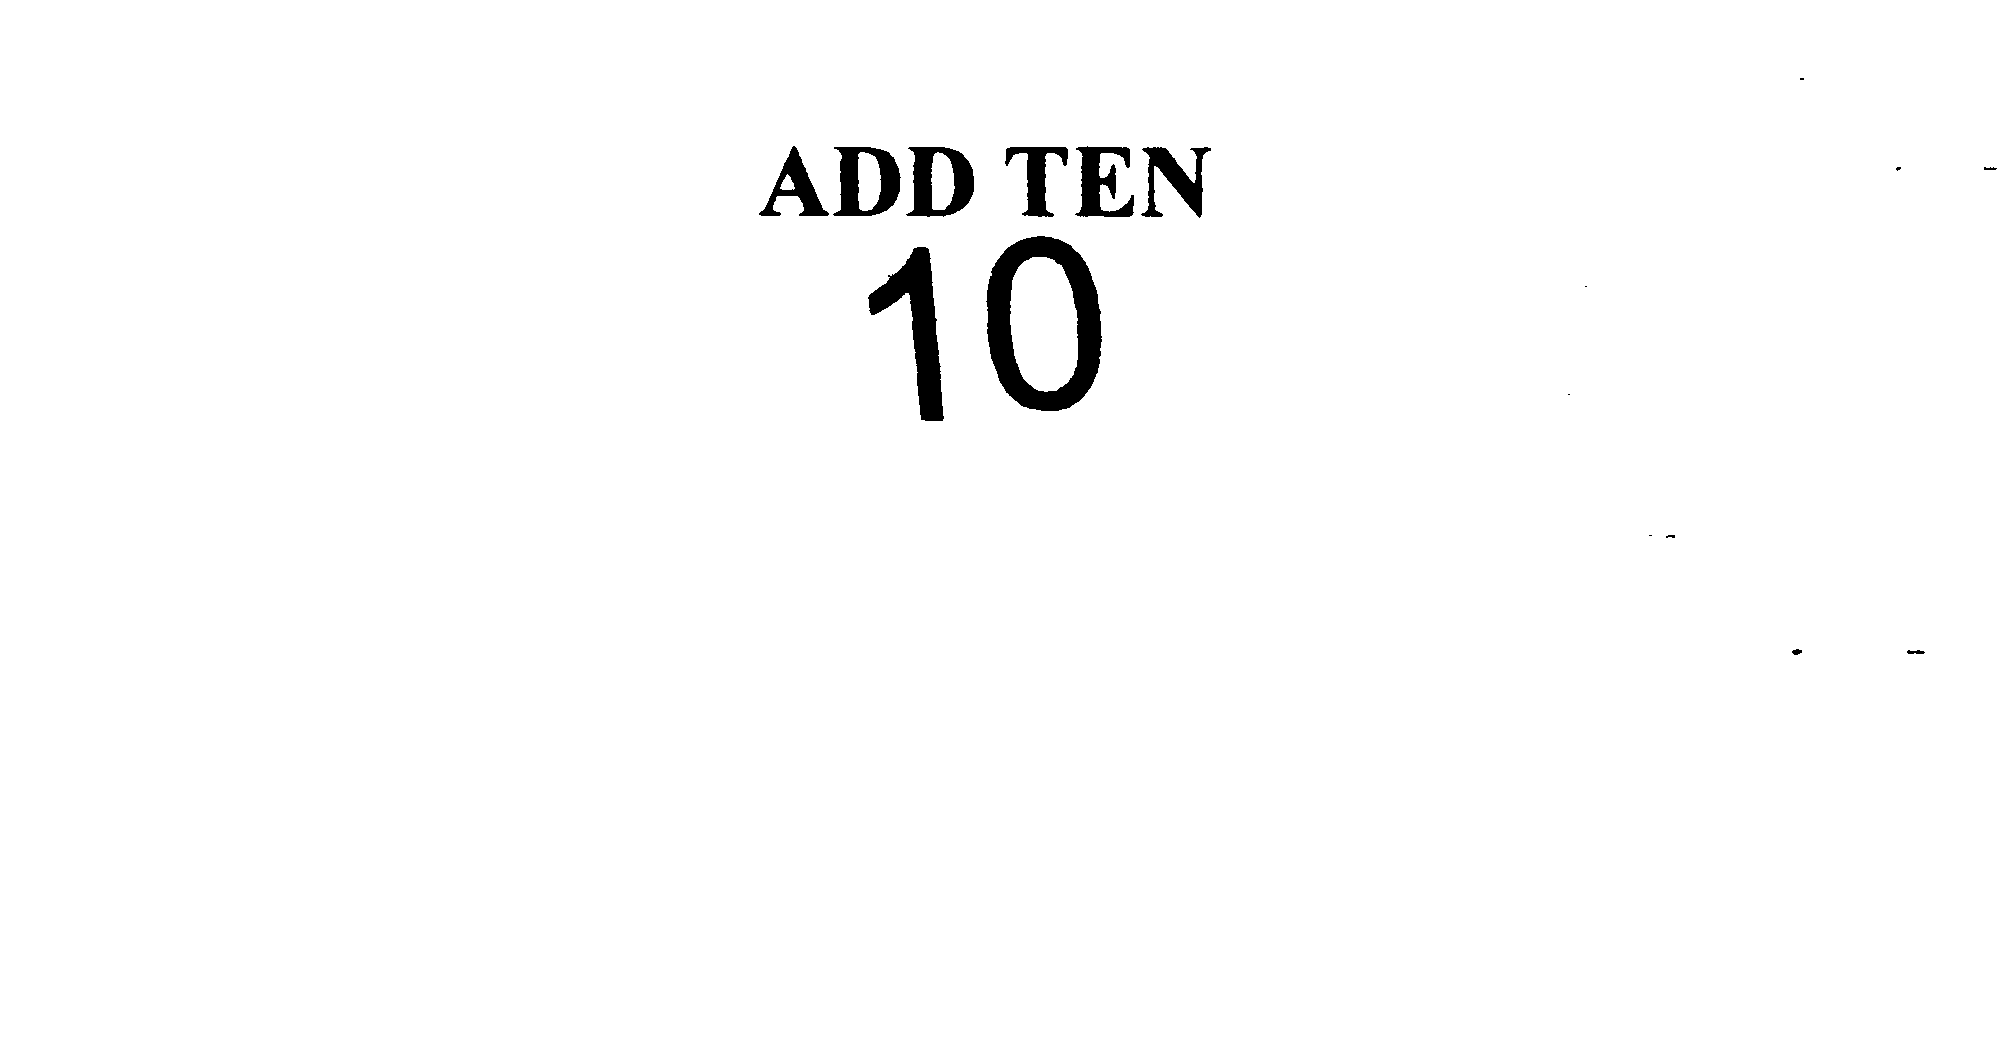  ADD TEN 10